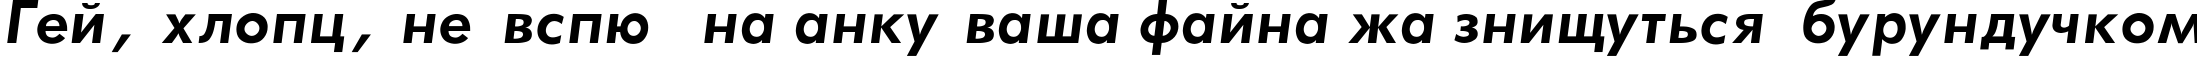 Пример написания шрифтом Futura_Book-Bold-Italic текста на украинском